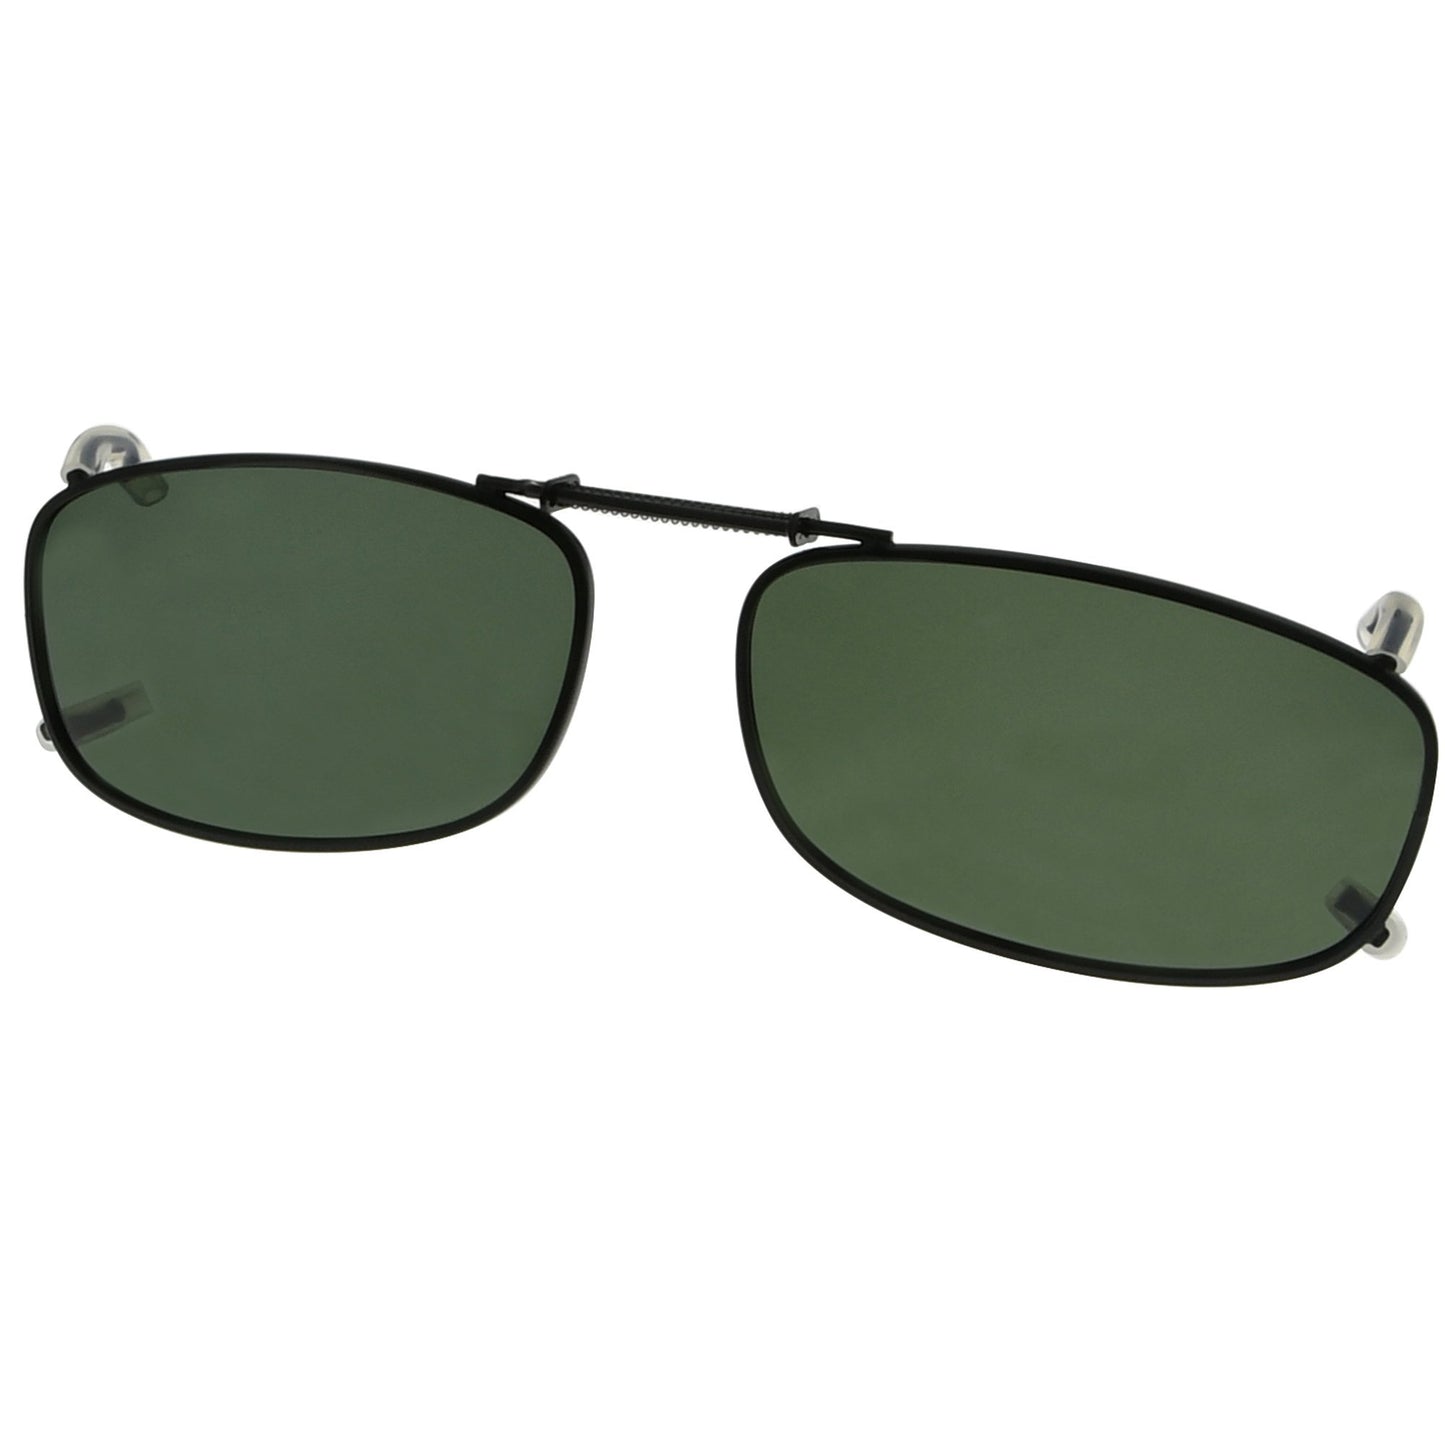 Rectanlge Sunglasses Clip On Polarized G15 C85